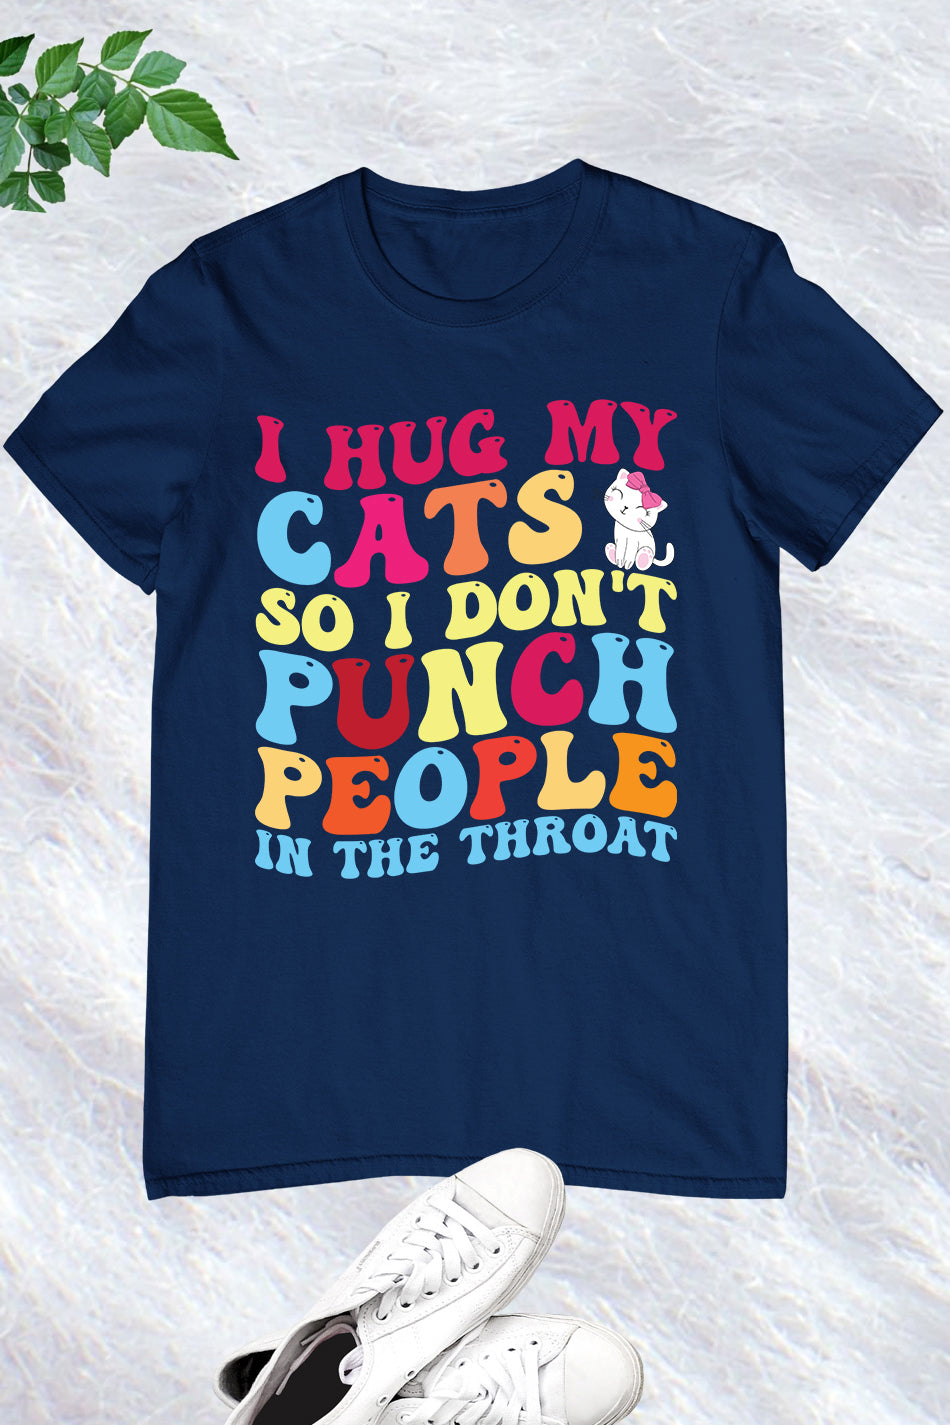 I Hug My Cats so I Don't Punch People Shirt